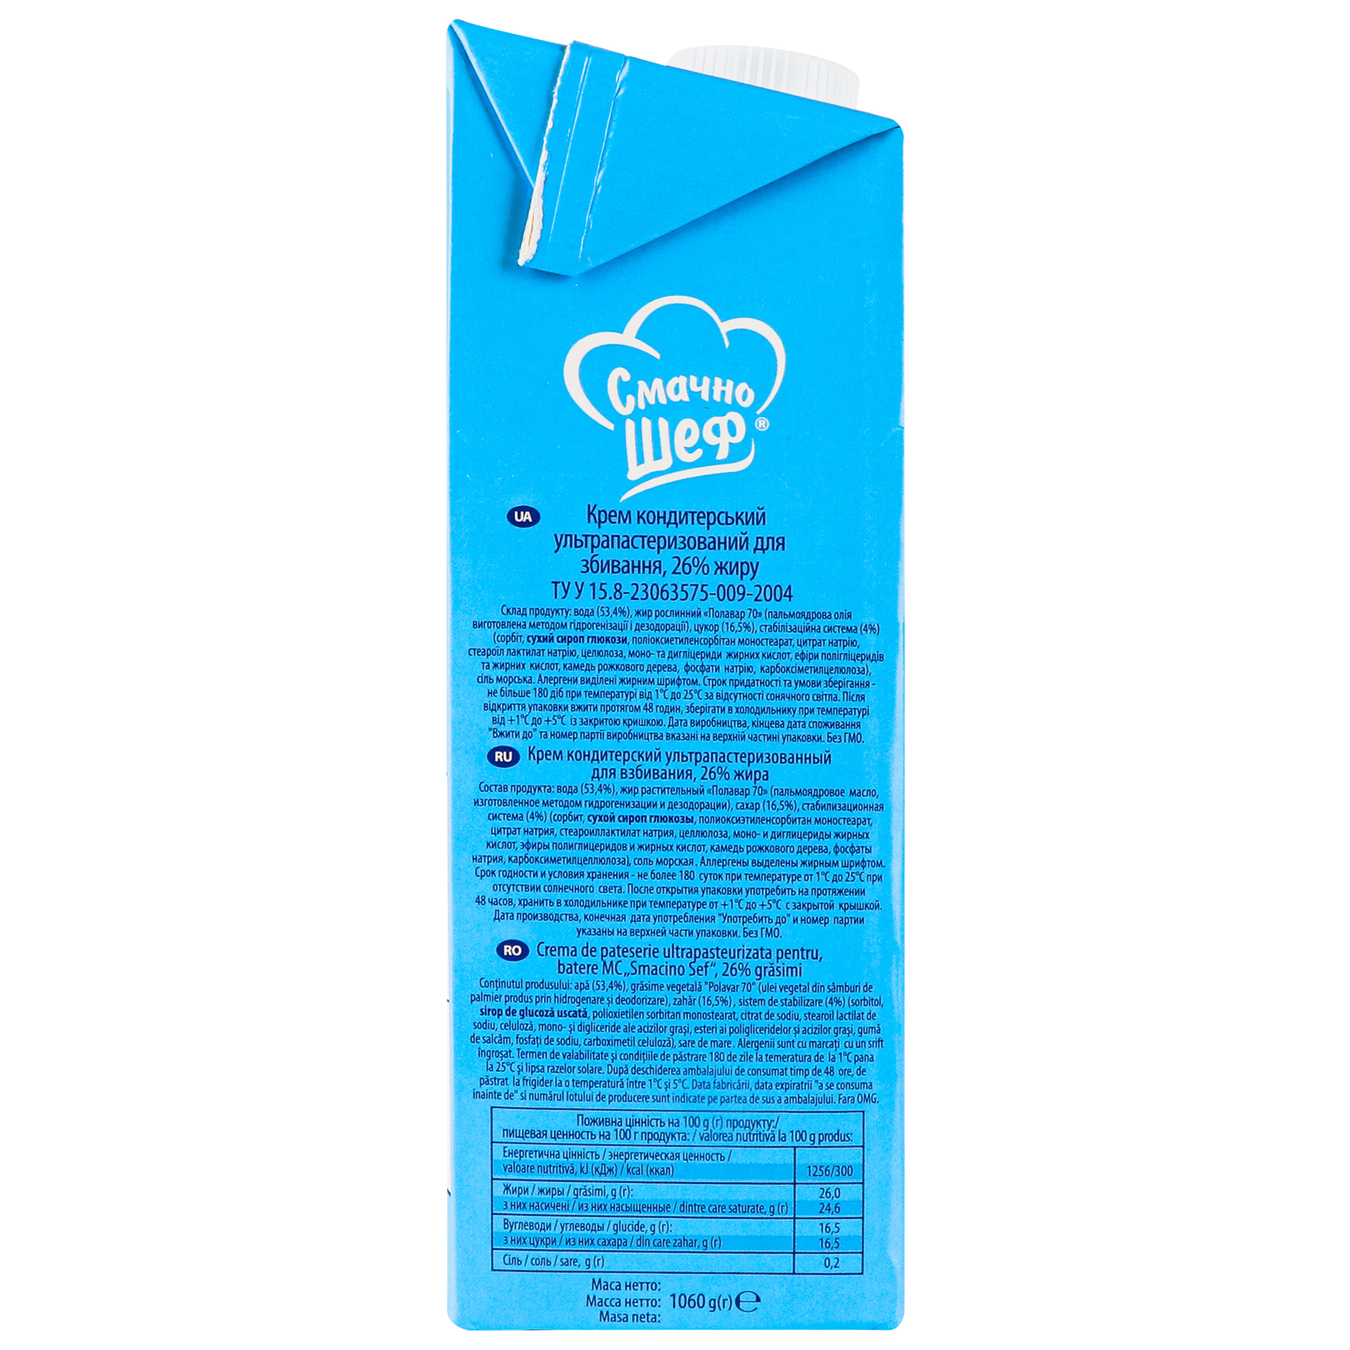 Cream Smachno Shef Сonfectionery UltraPasteurized 26% 1060g 5